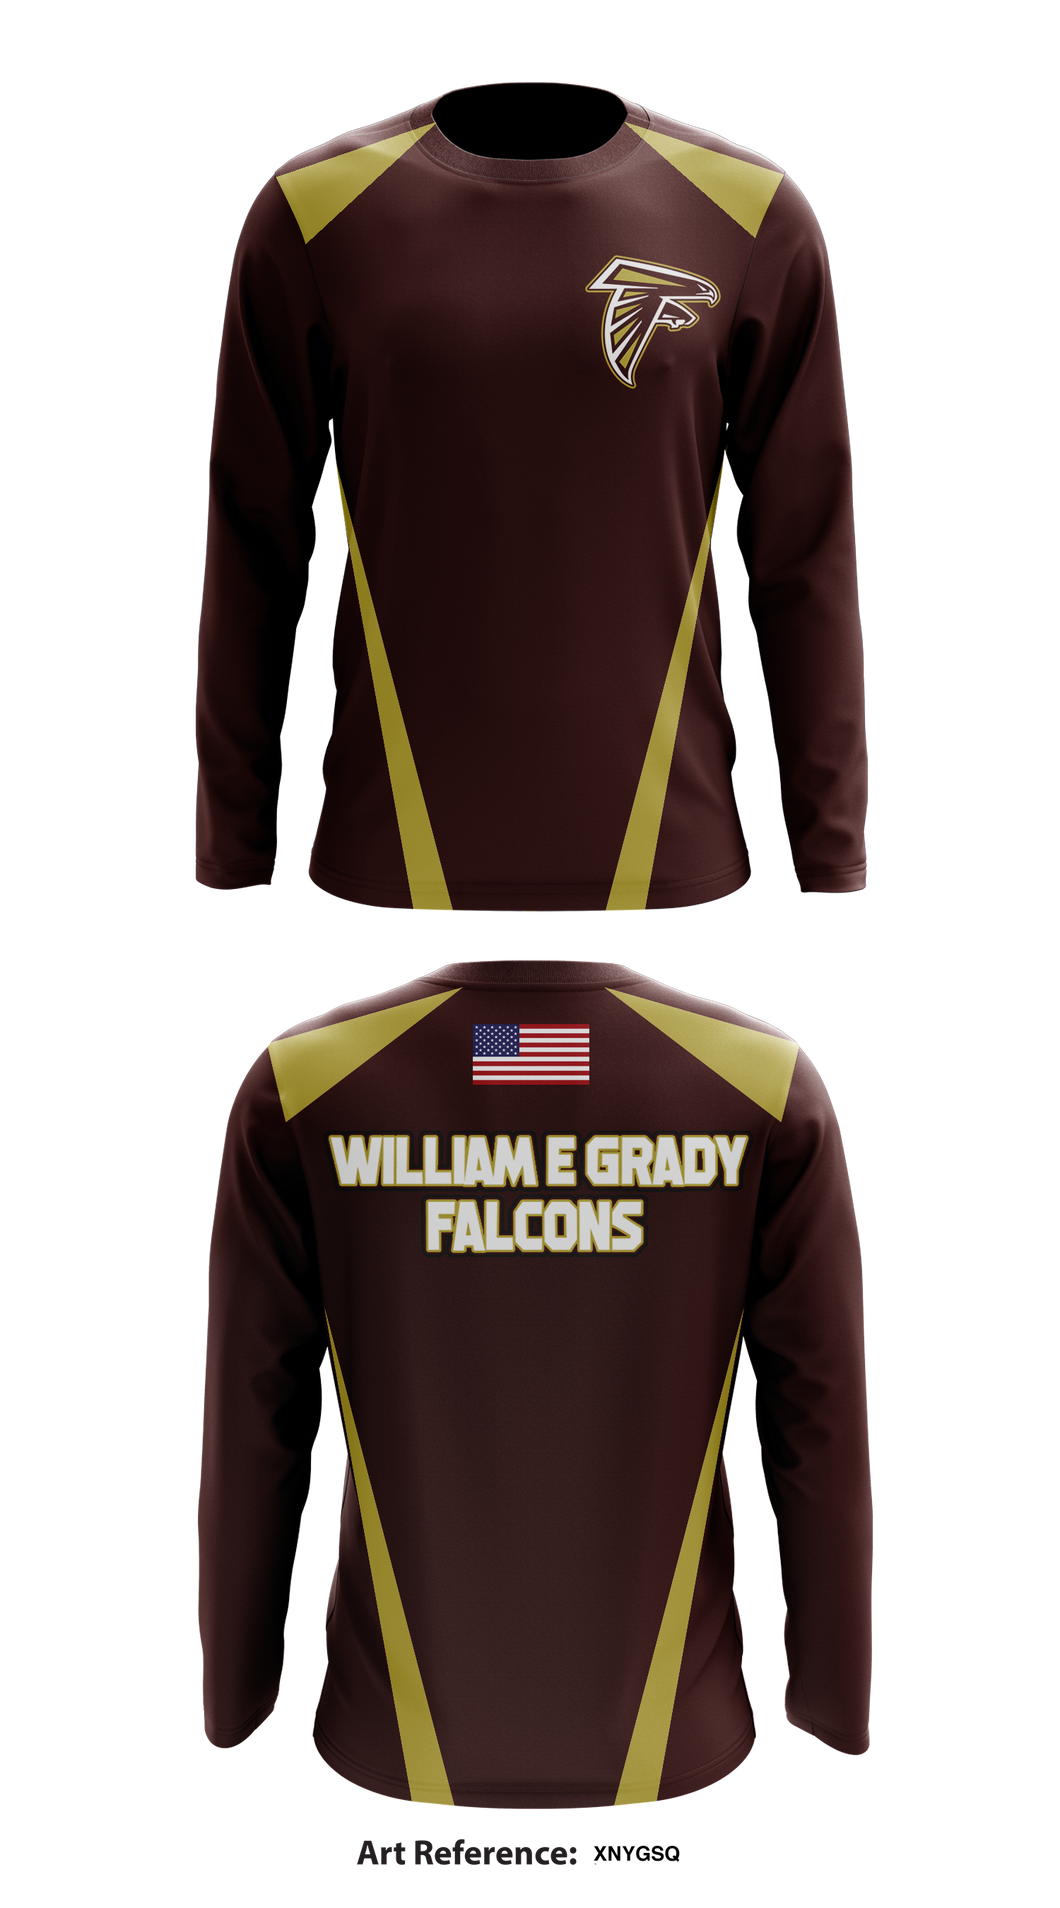 William E Grady Falcons 94595732 Long Sleeve Performance Shirt - 1